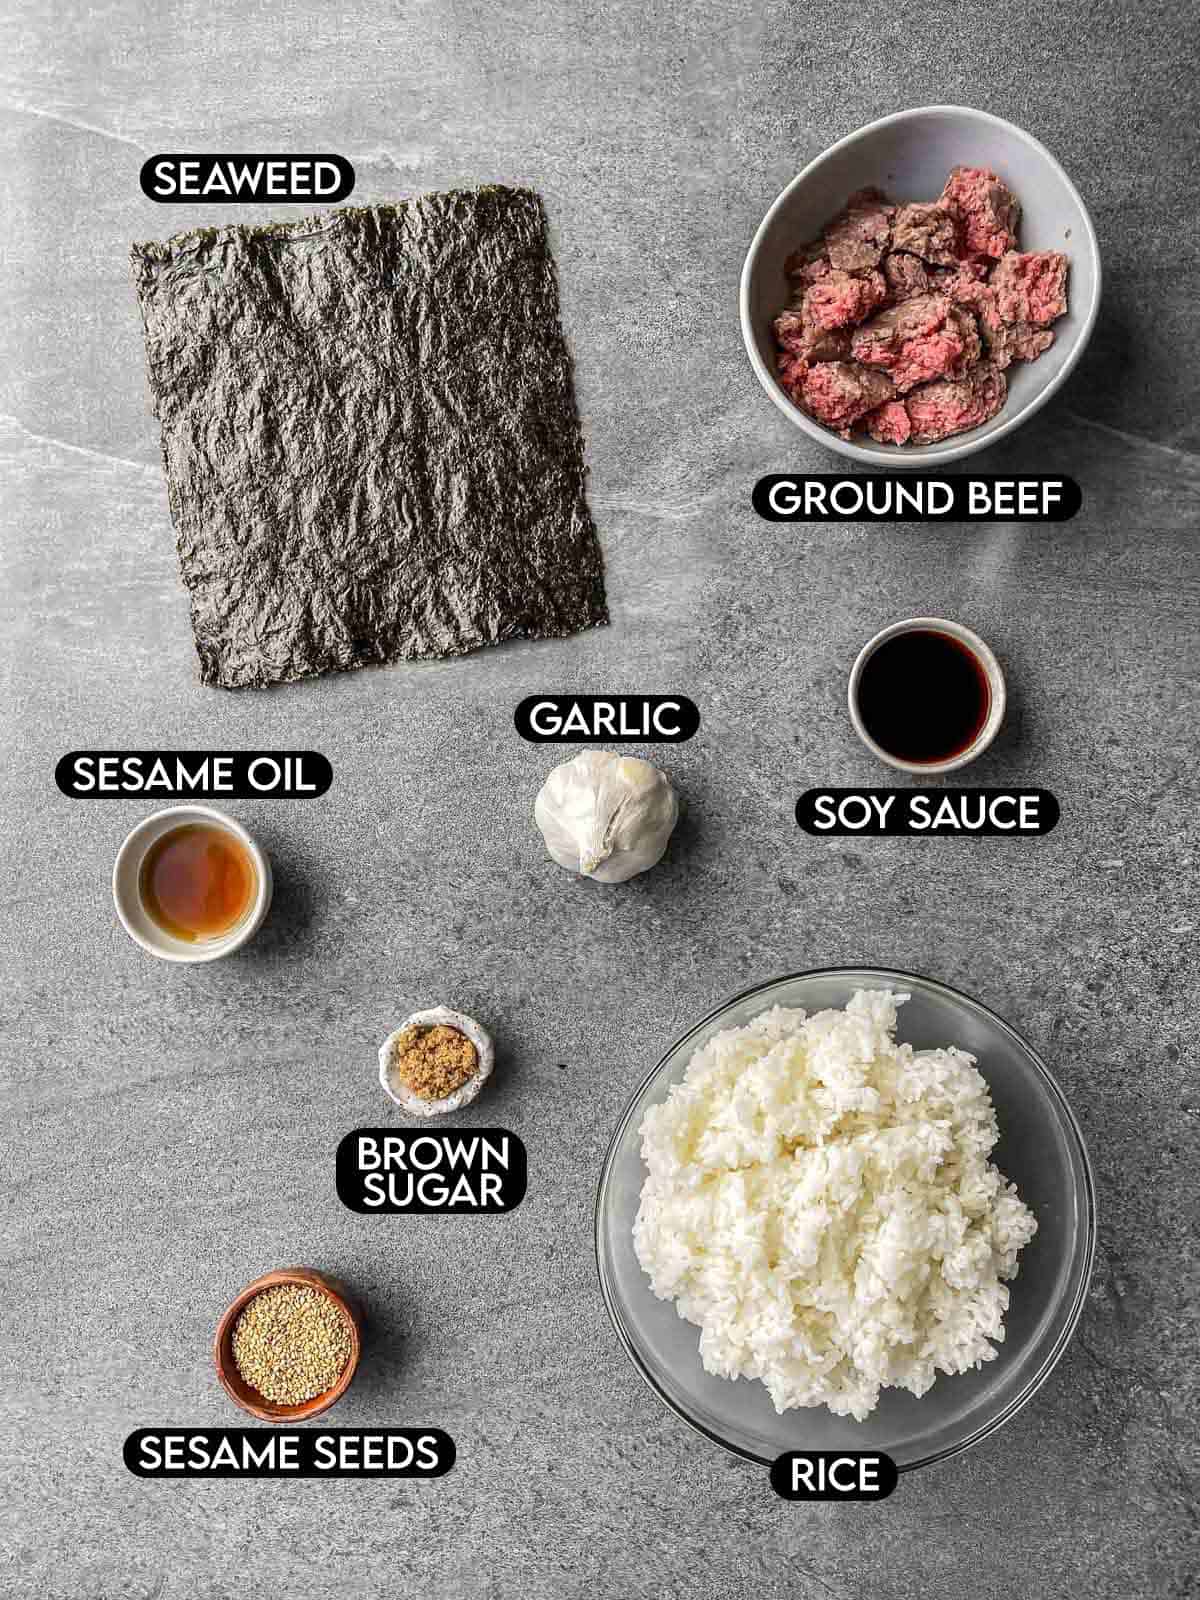 Labeled ingredients for jumeokbap: seaweed, ground beef, sesame oil, garlic, soy sauce, brown sugar, sesame seeds, and rice.